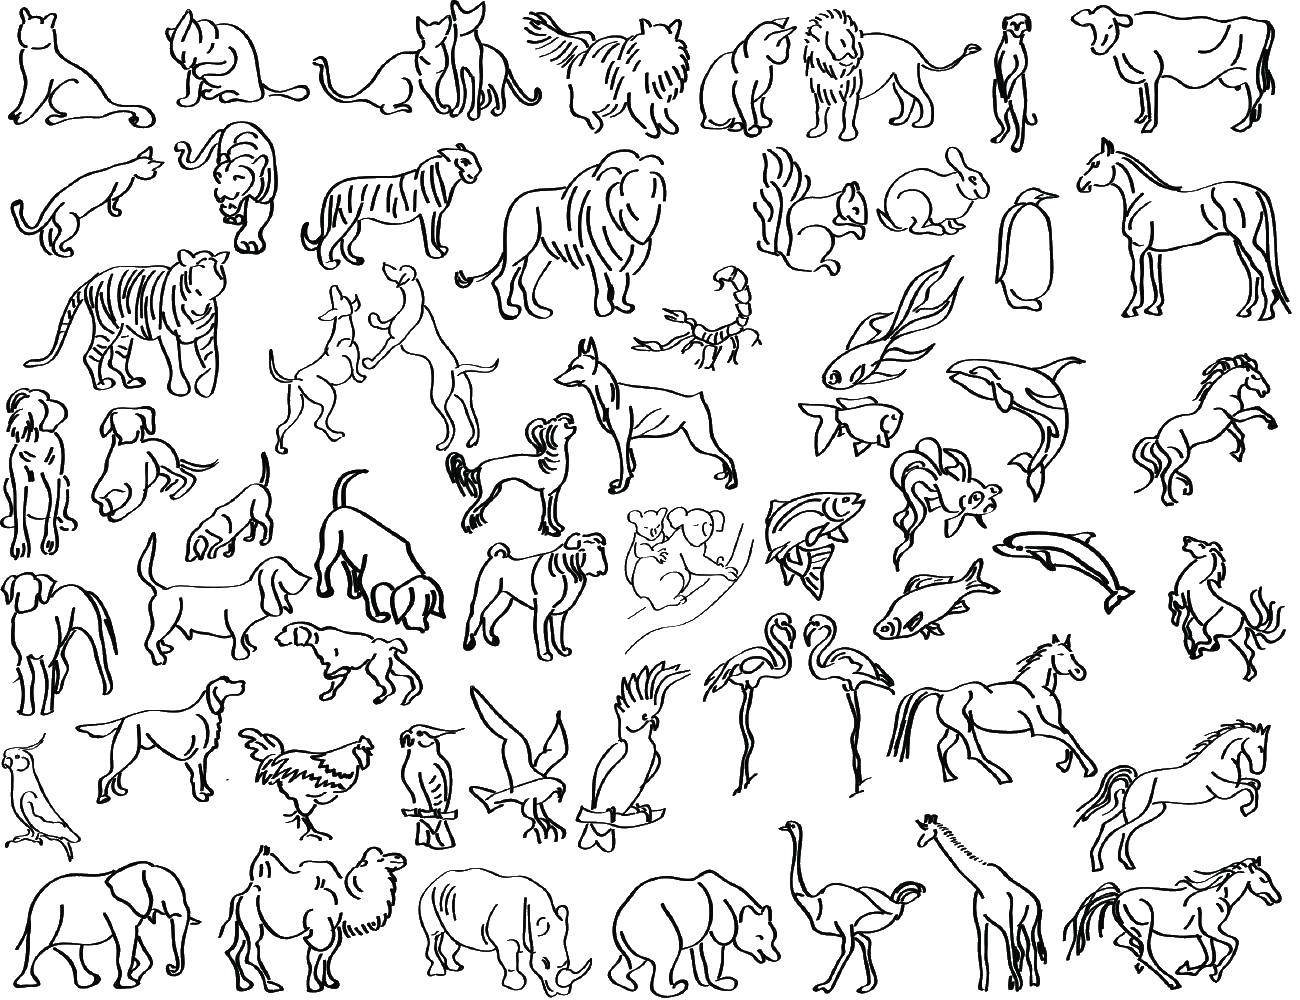 Множество рисунков животных на одном листе